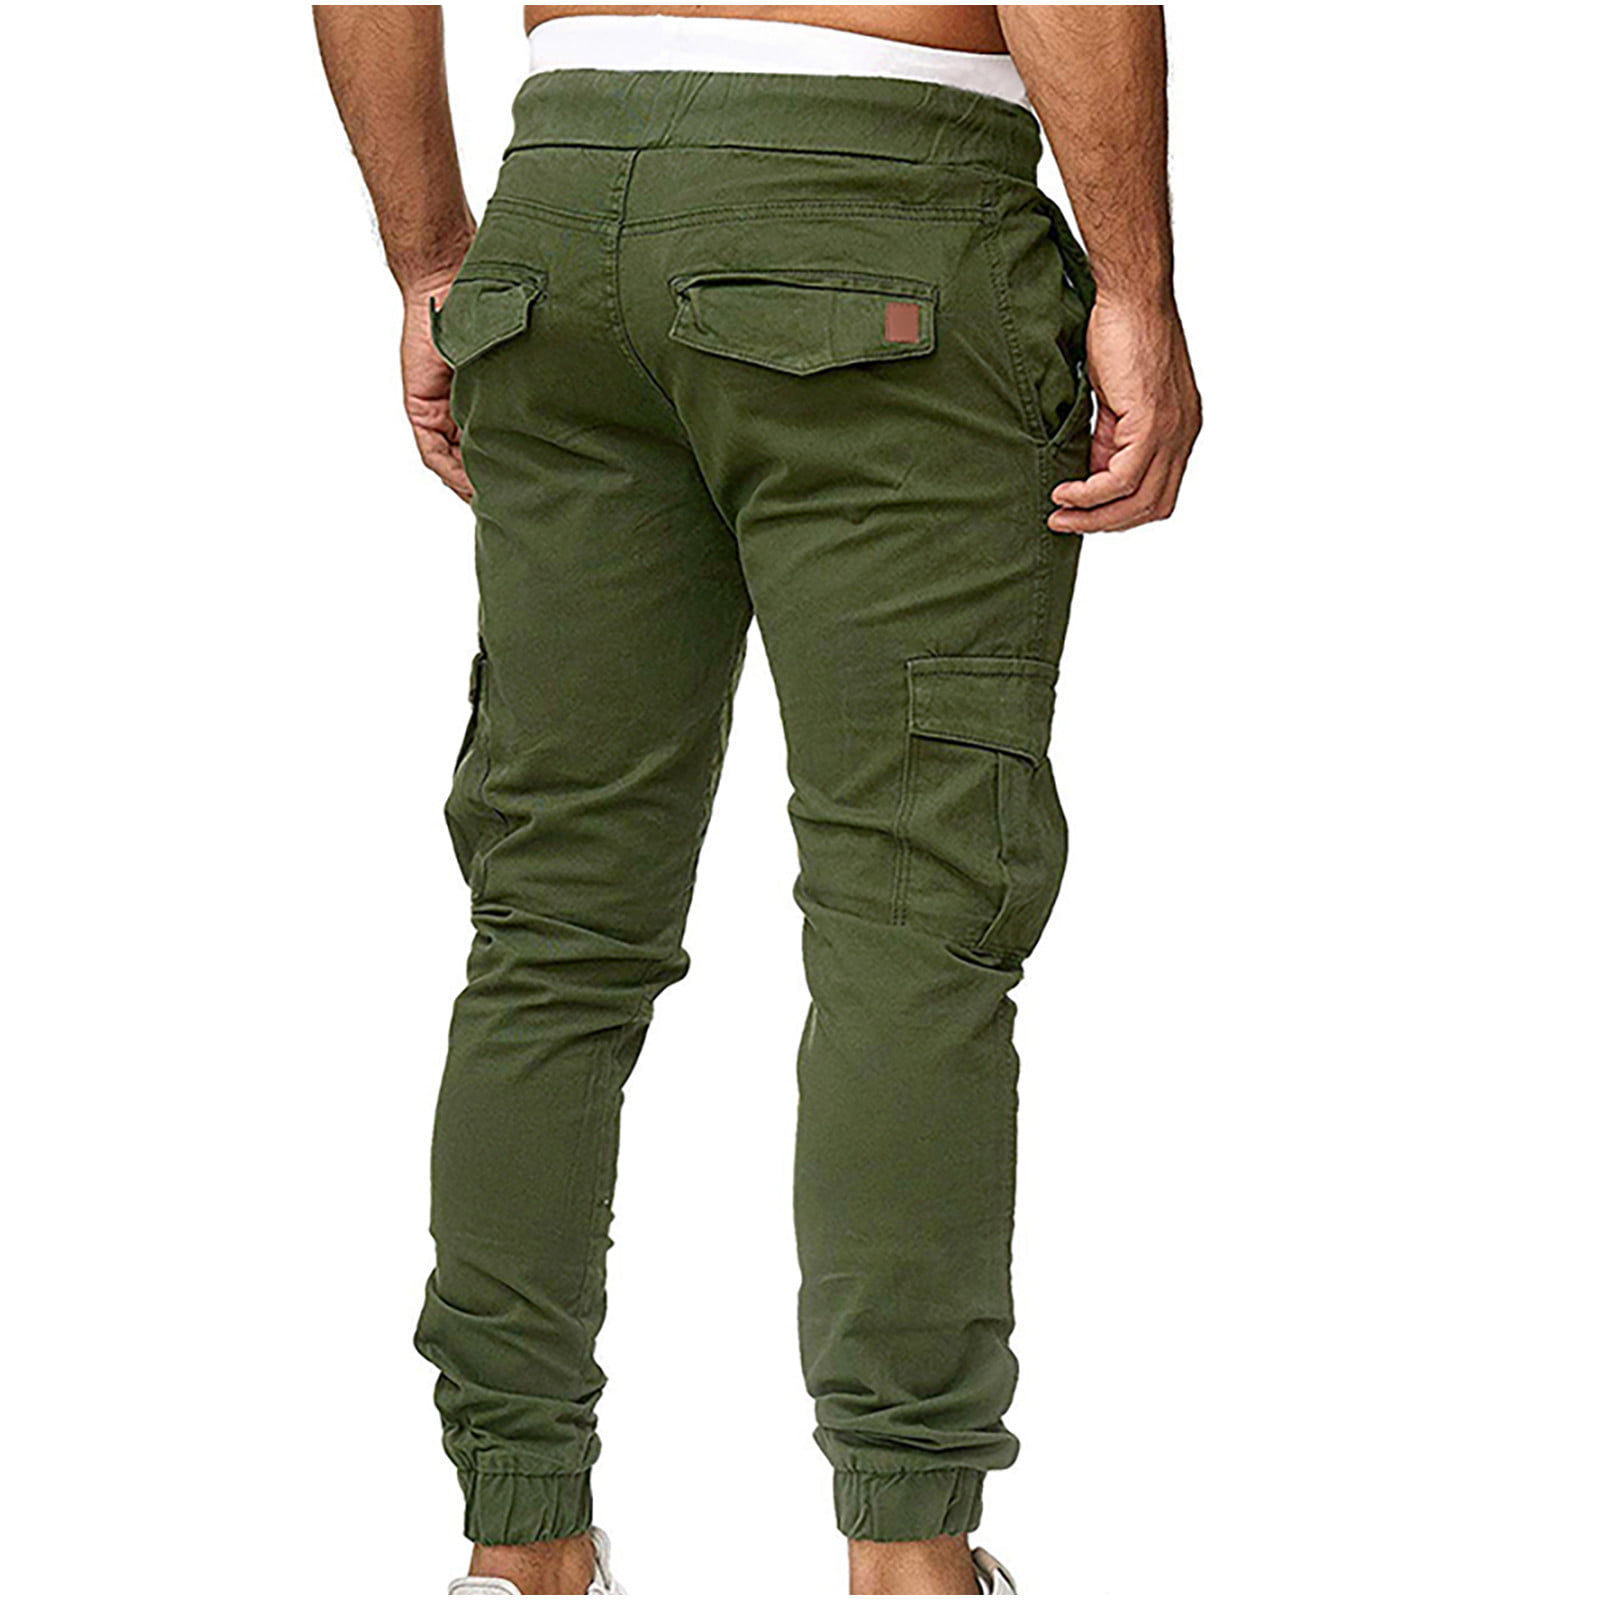 Hfyihgf Mens Fashion Cargo Pants with Multi Pockets Casual Cotton Tapered  Stretch Twill Drawstring Athletic Joggers SweatpantsArmy Green,XXL